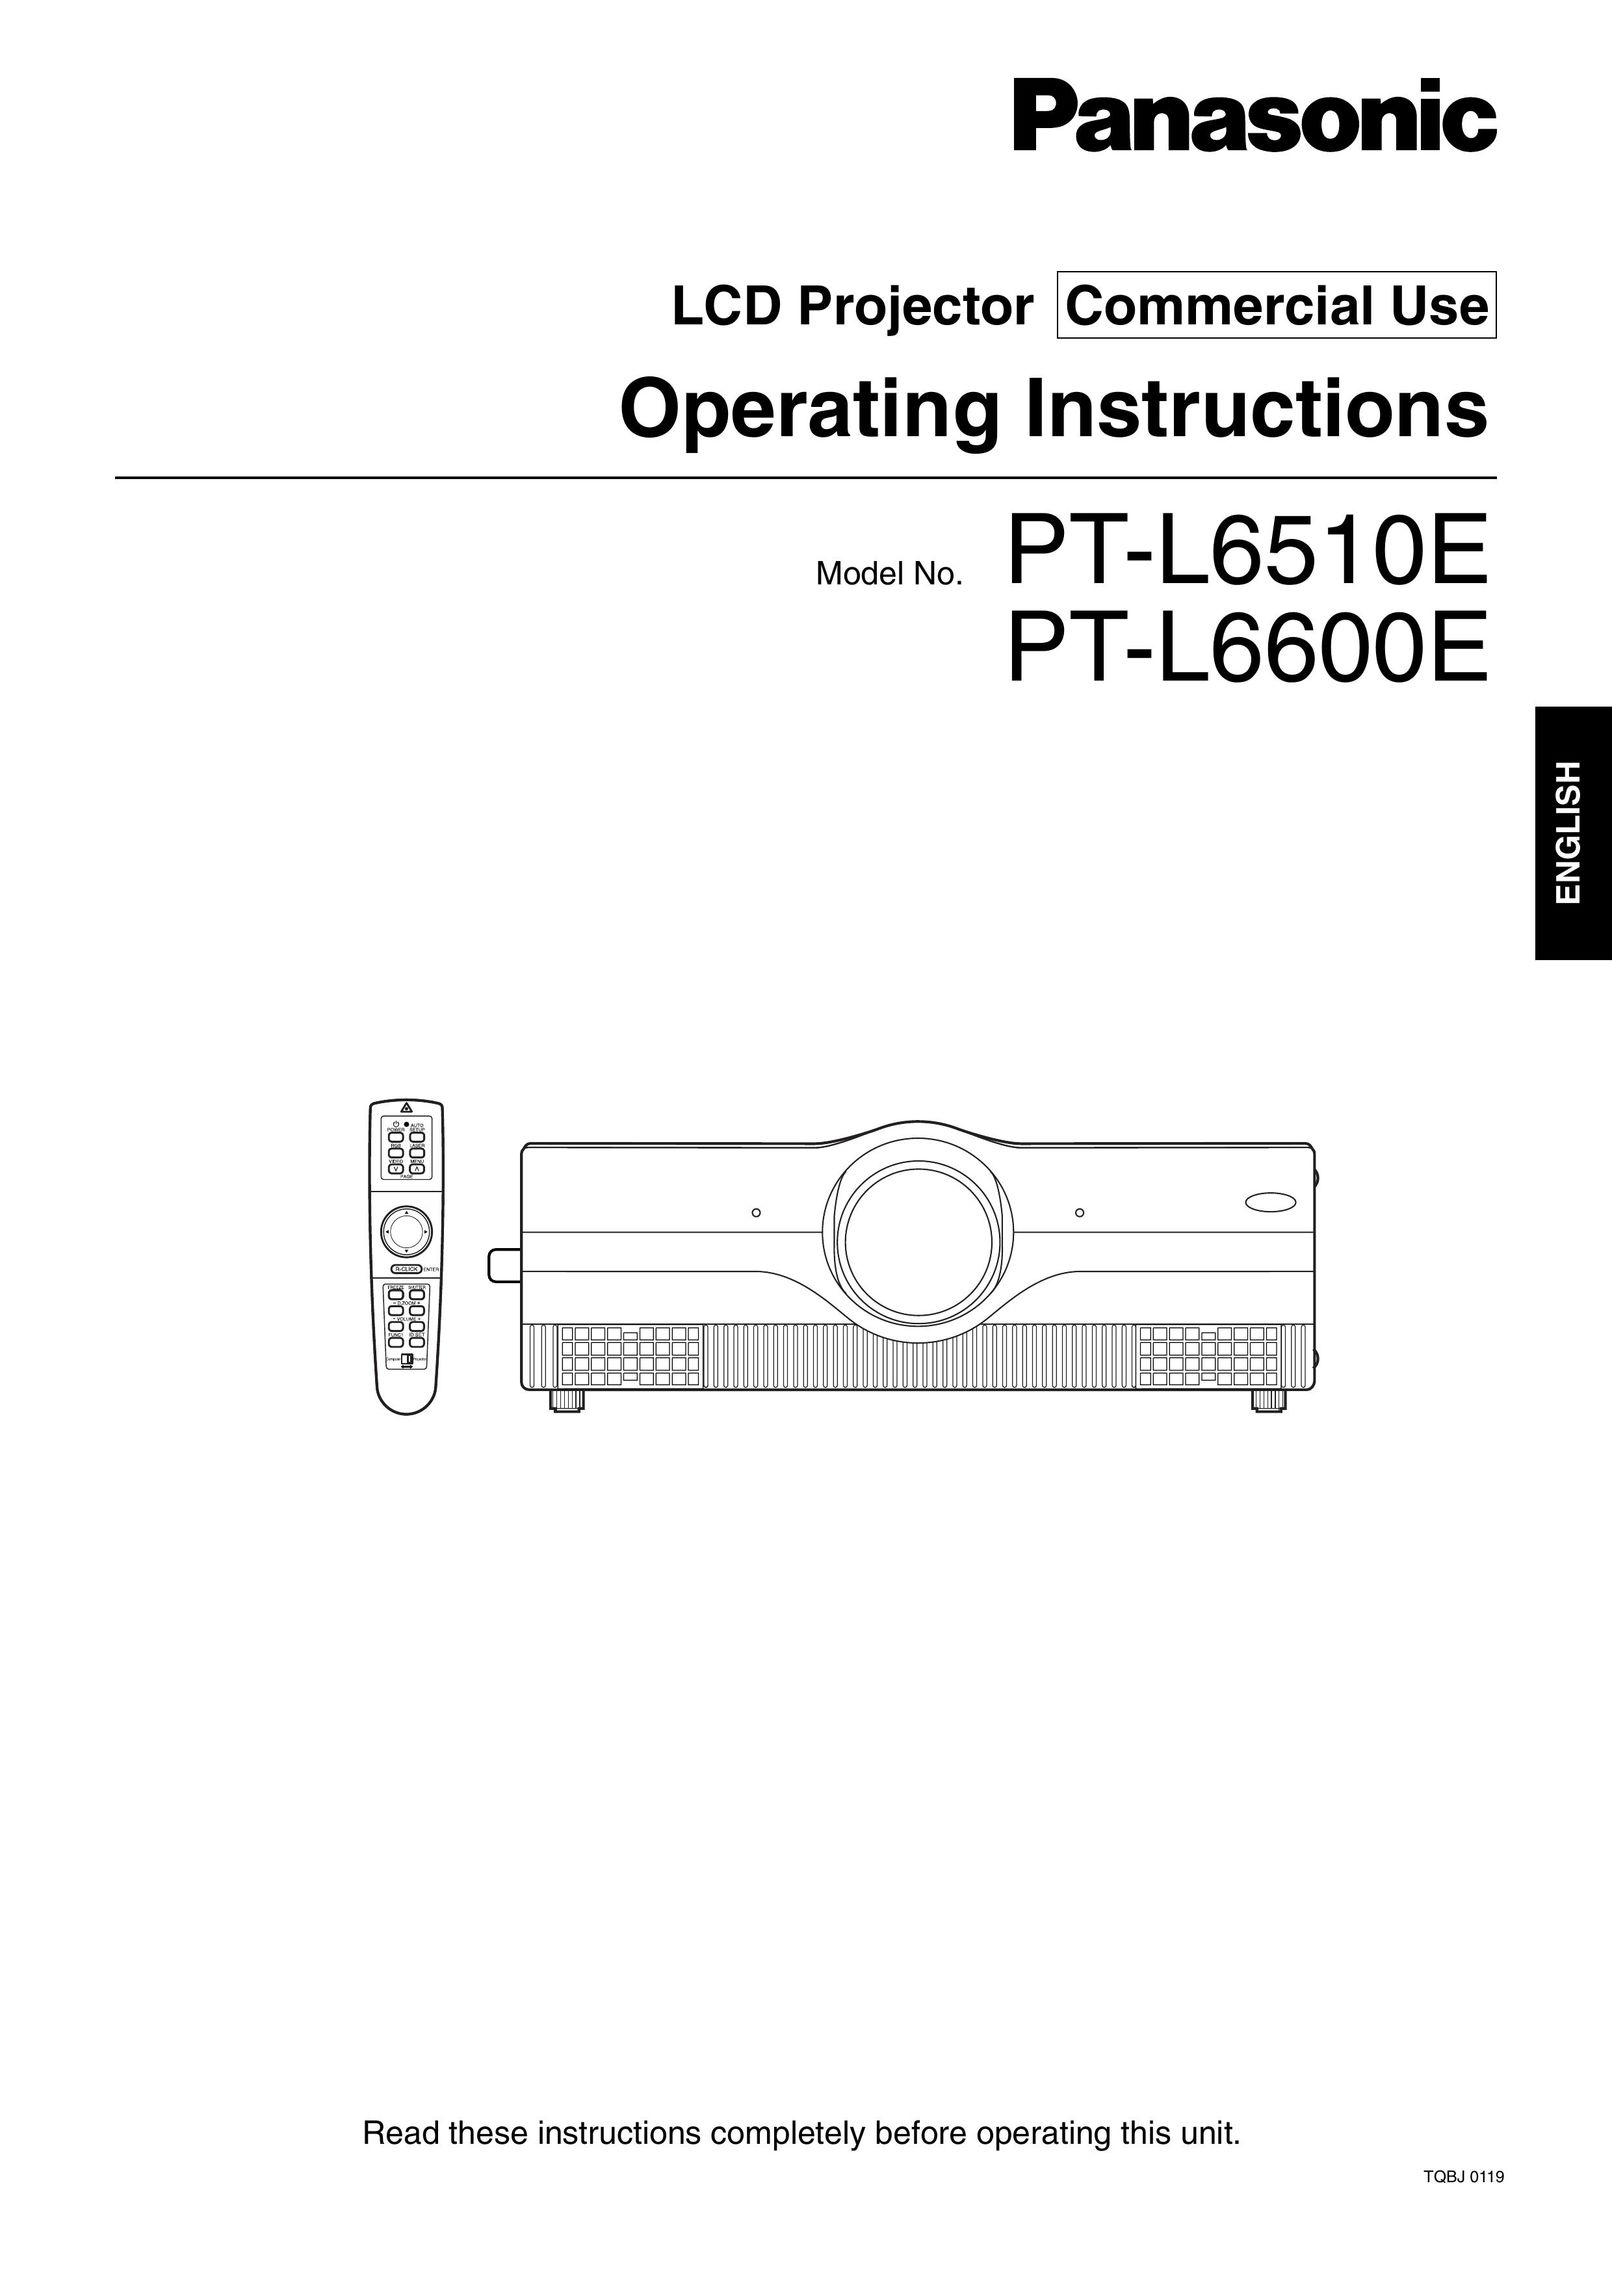 Luce PT-L6510E Projector User Manual